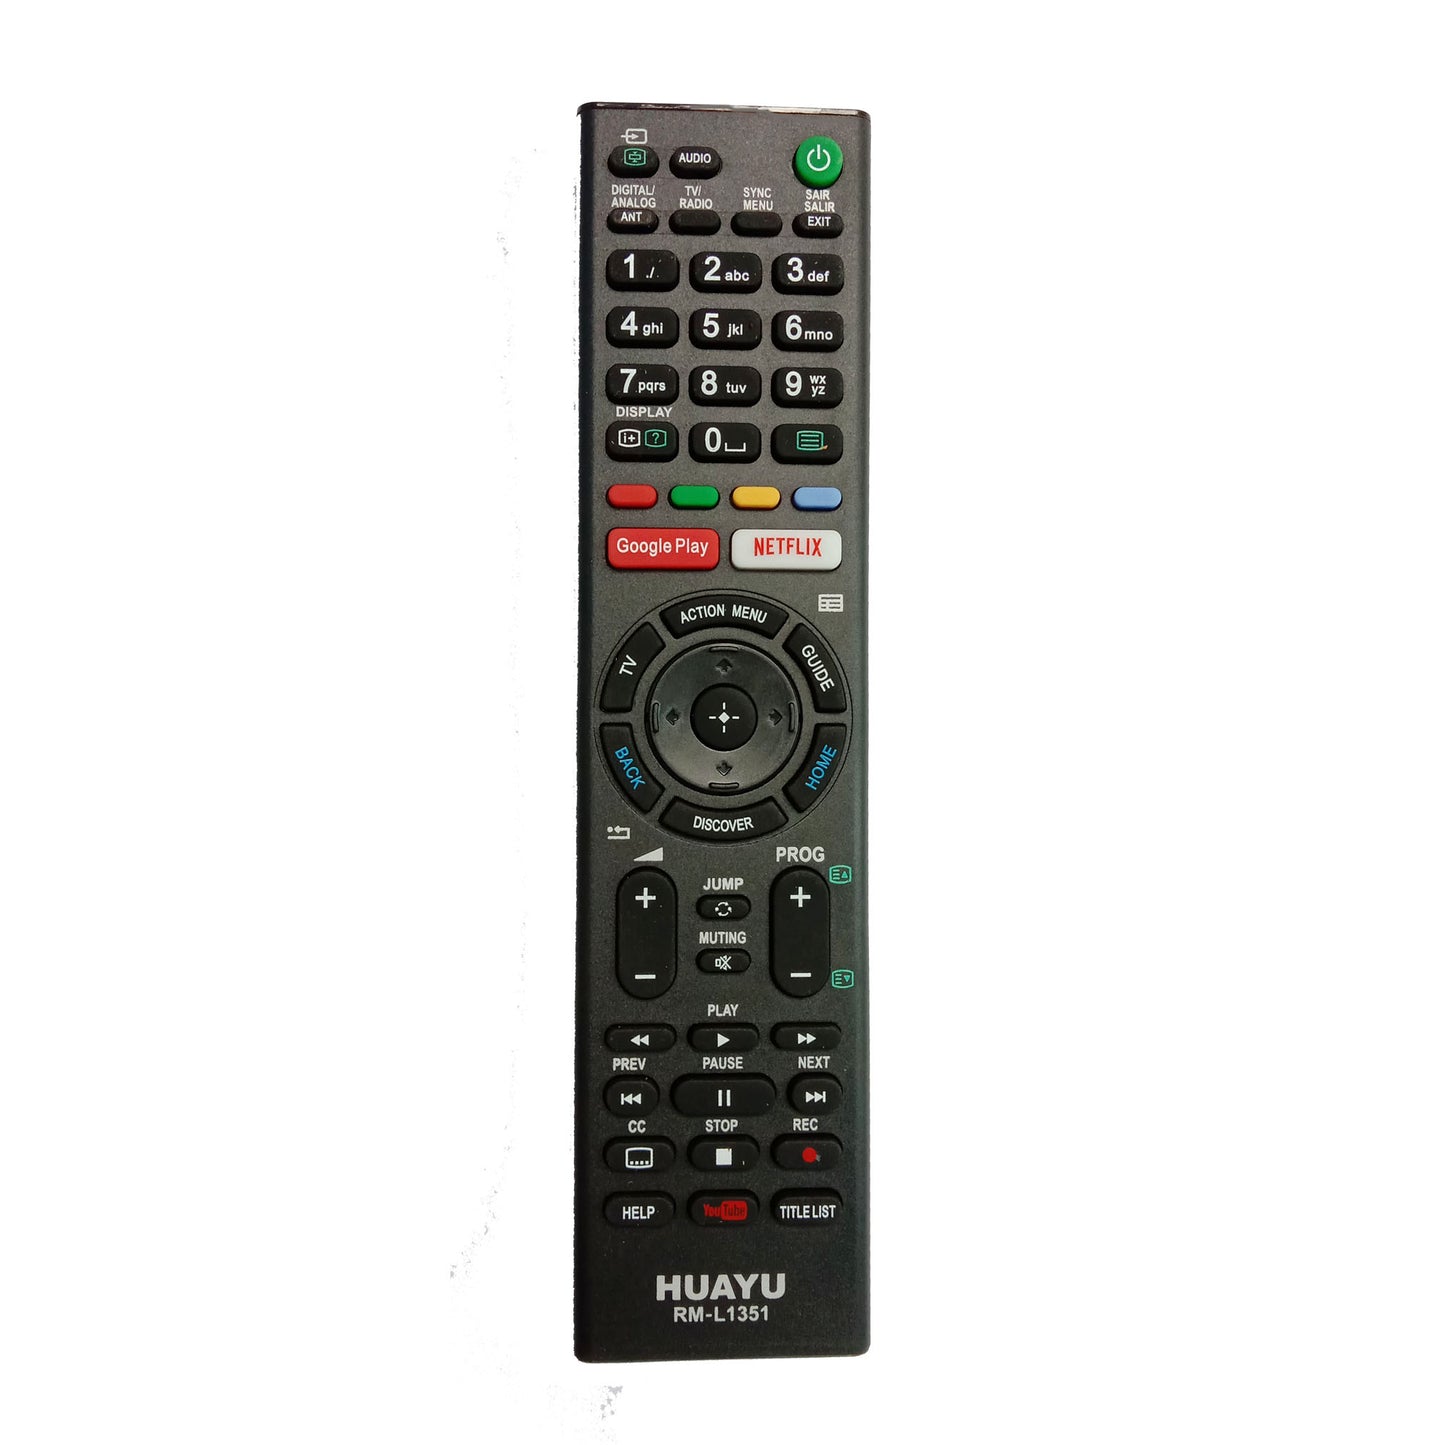 Sony Smart TV remote control Netflix Google Play Youtube RM-L1351